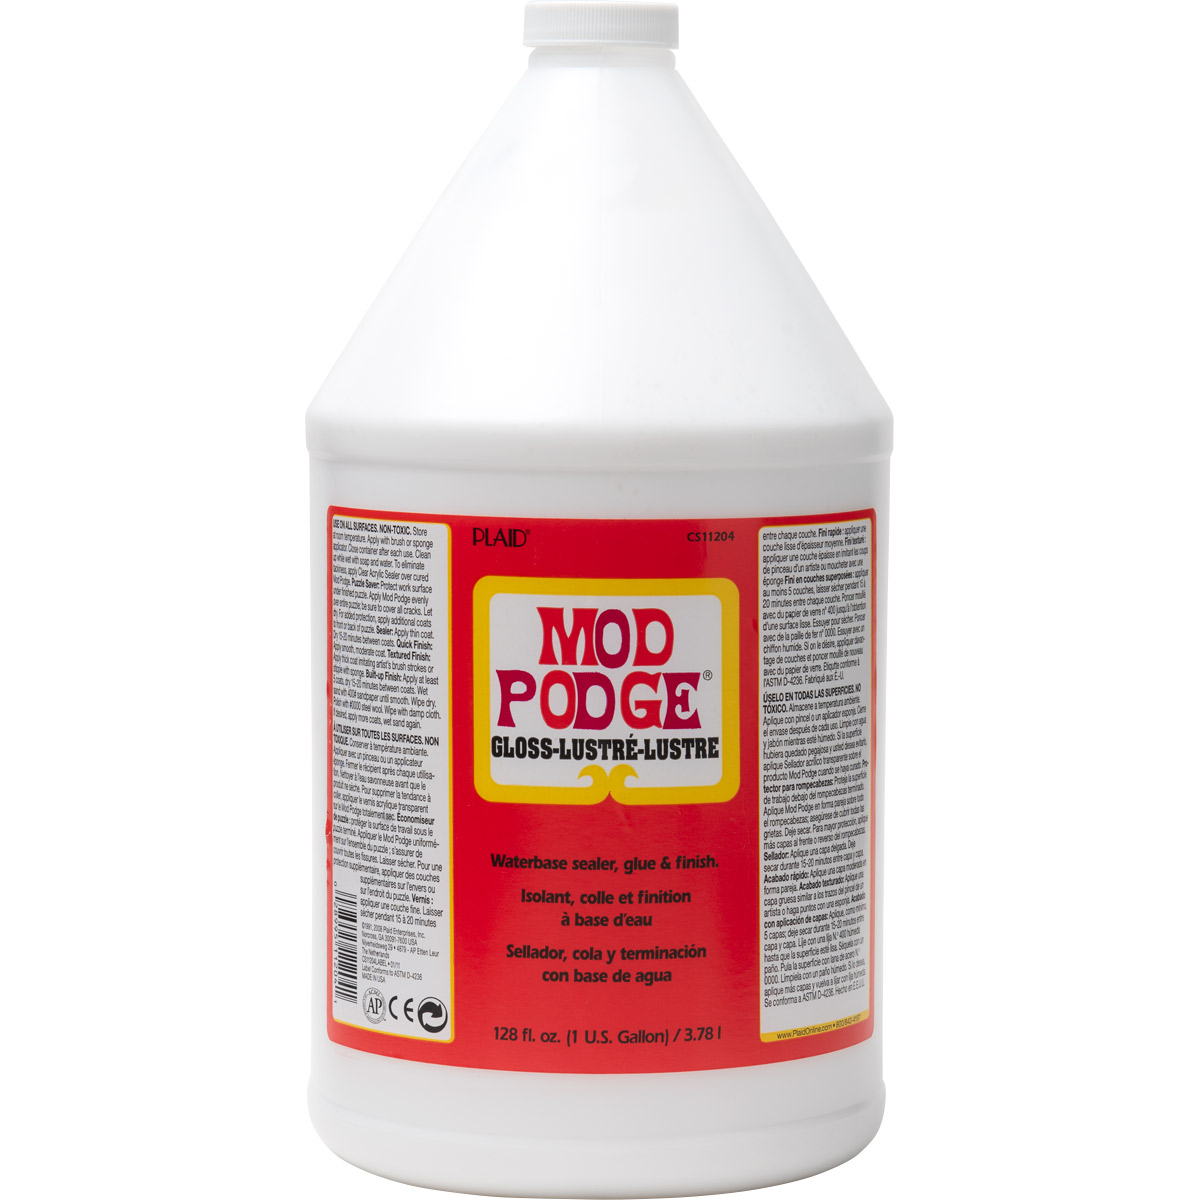 Mod Podge Complete Decoupage Kit-Two 16oz Bottles Waterbase Sealer/Glue  (Matte Gloss Finish) with 4-pk Foam Brush Set, Clear